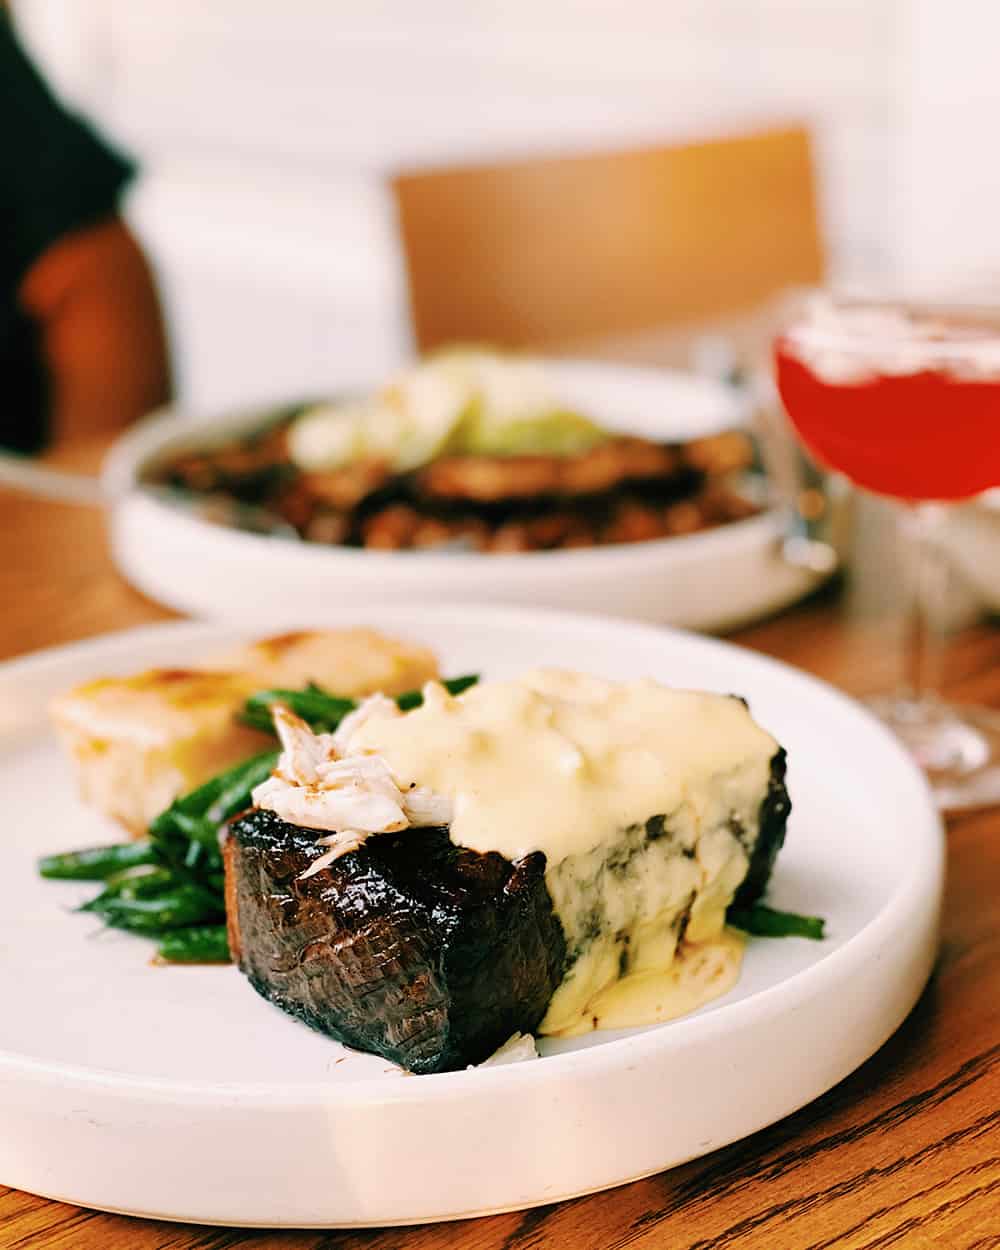 Wagyu Strip Steak “Oscar Style” at Rosewood restaurant